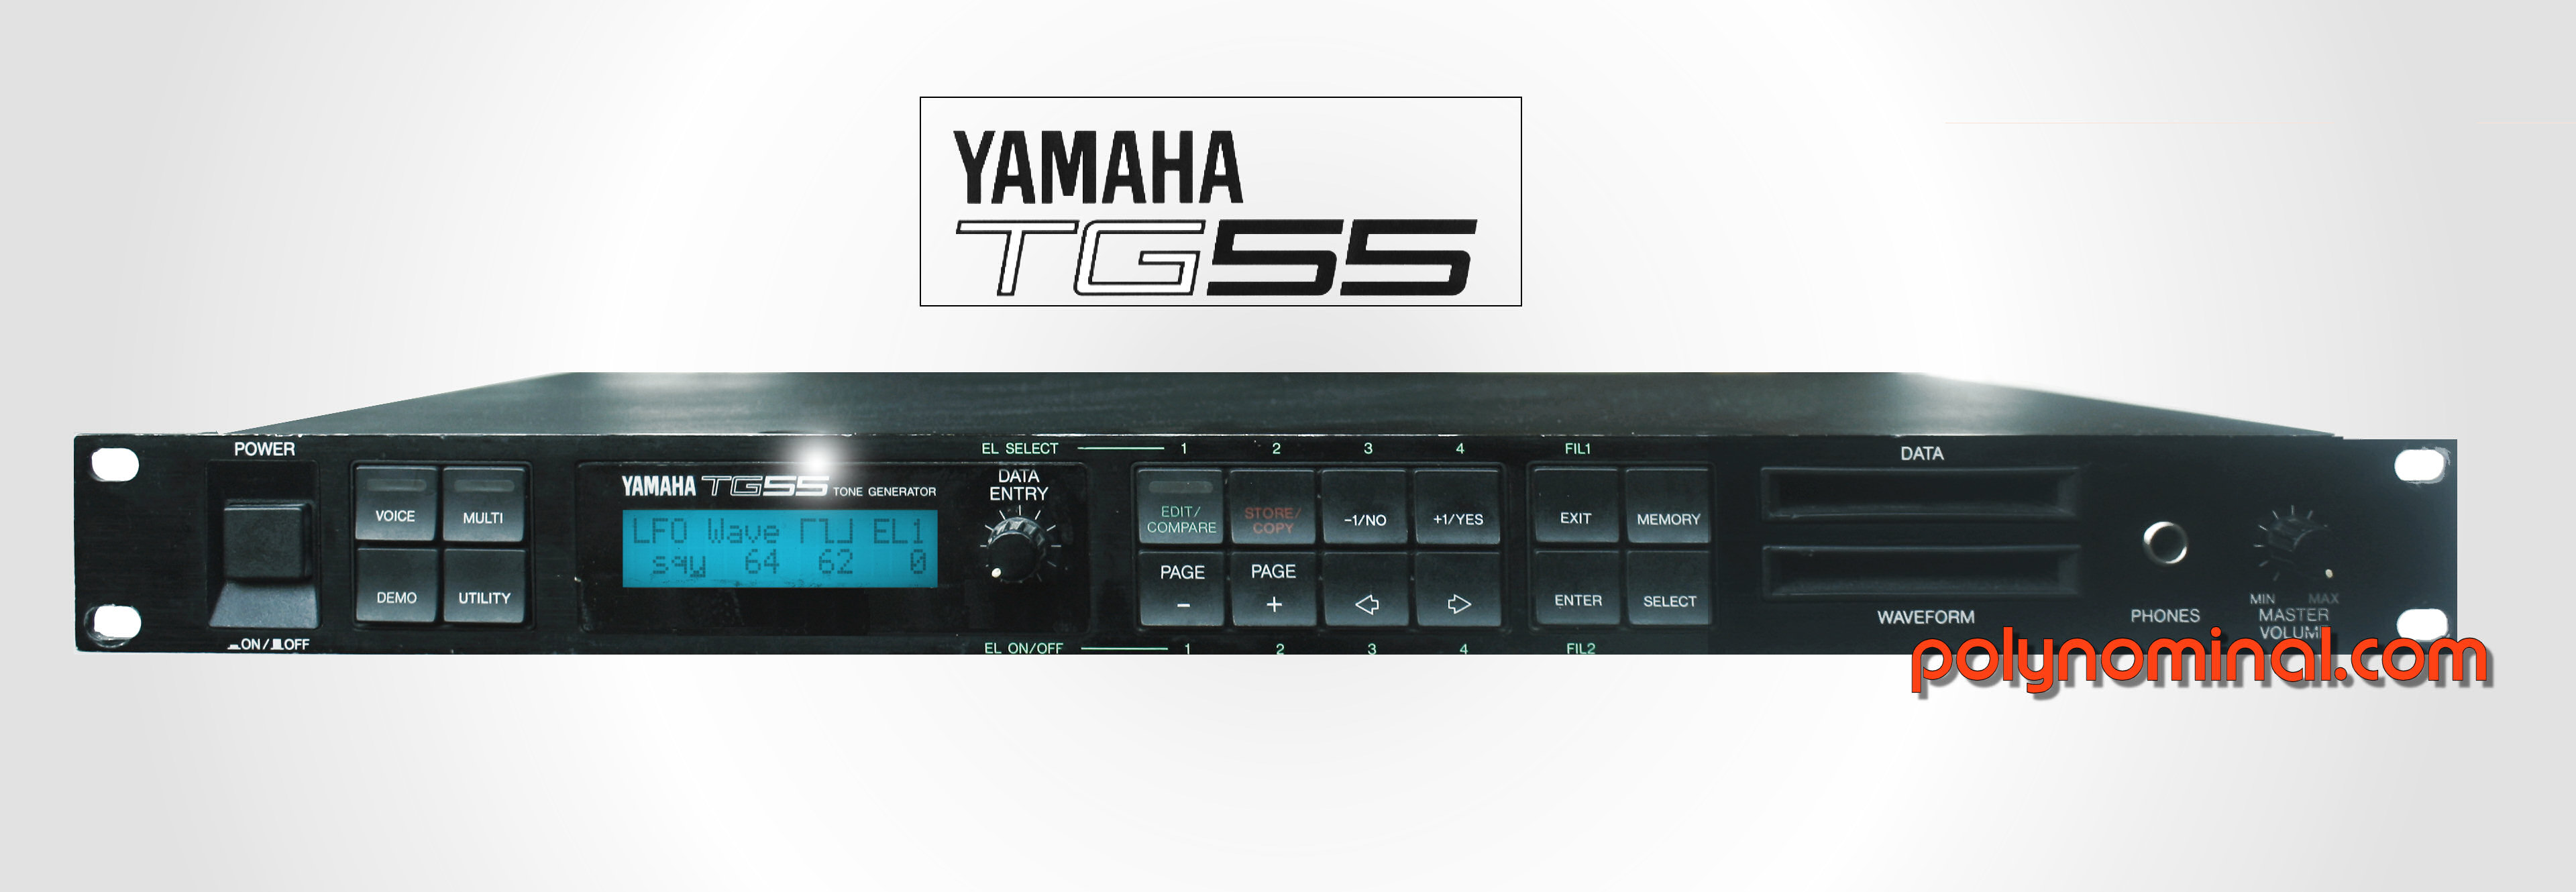 Yamaha TG-55